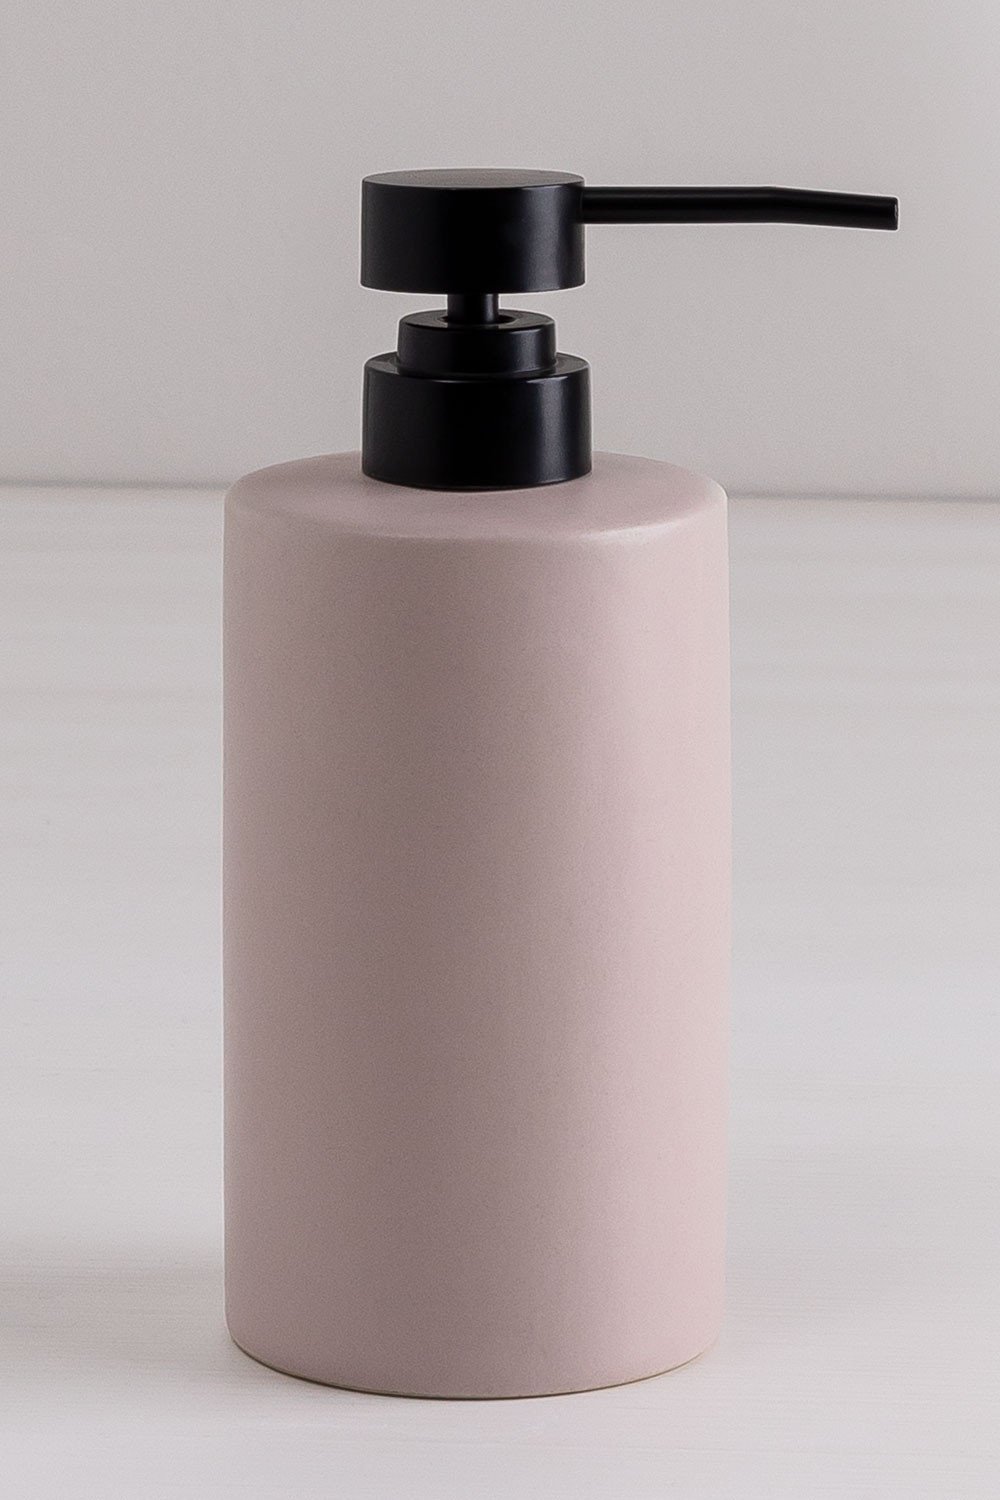 Ceramic Soap Dispenser Holdin, gallery image 1